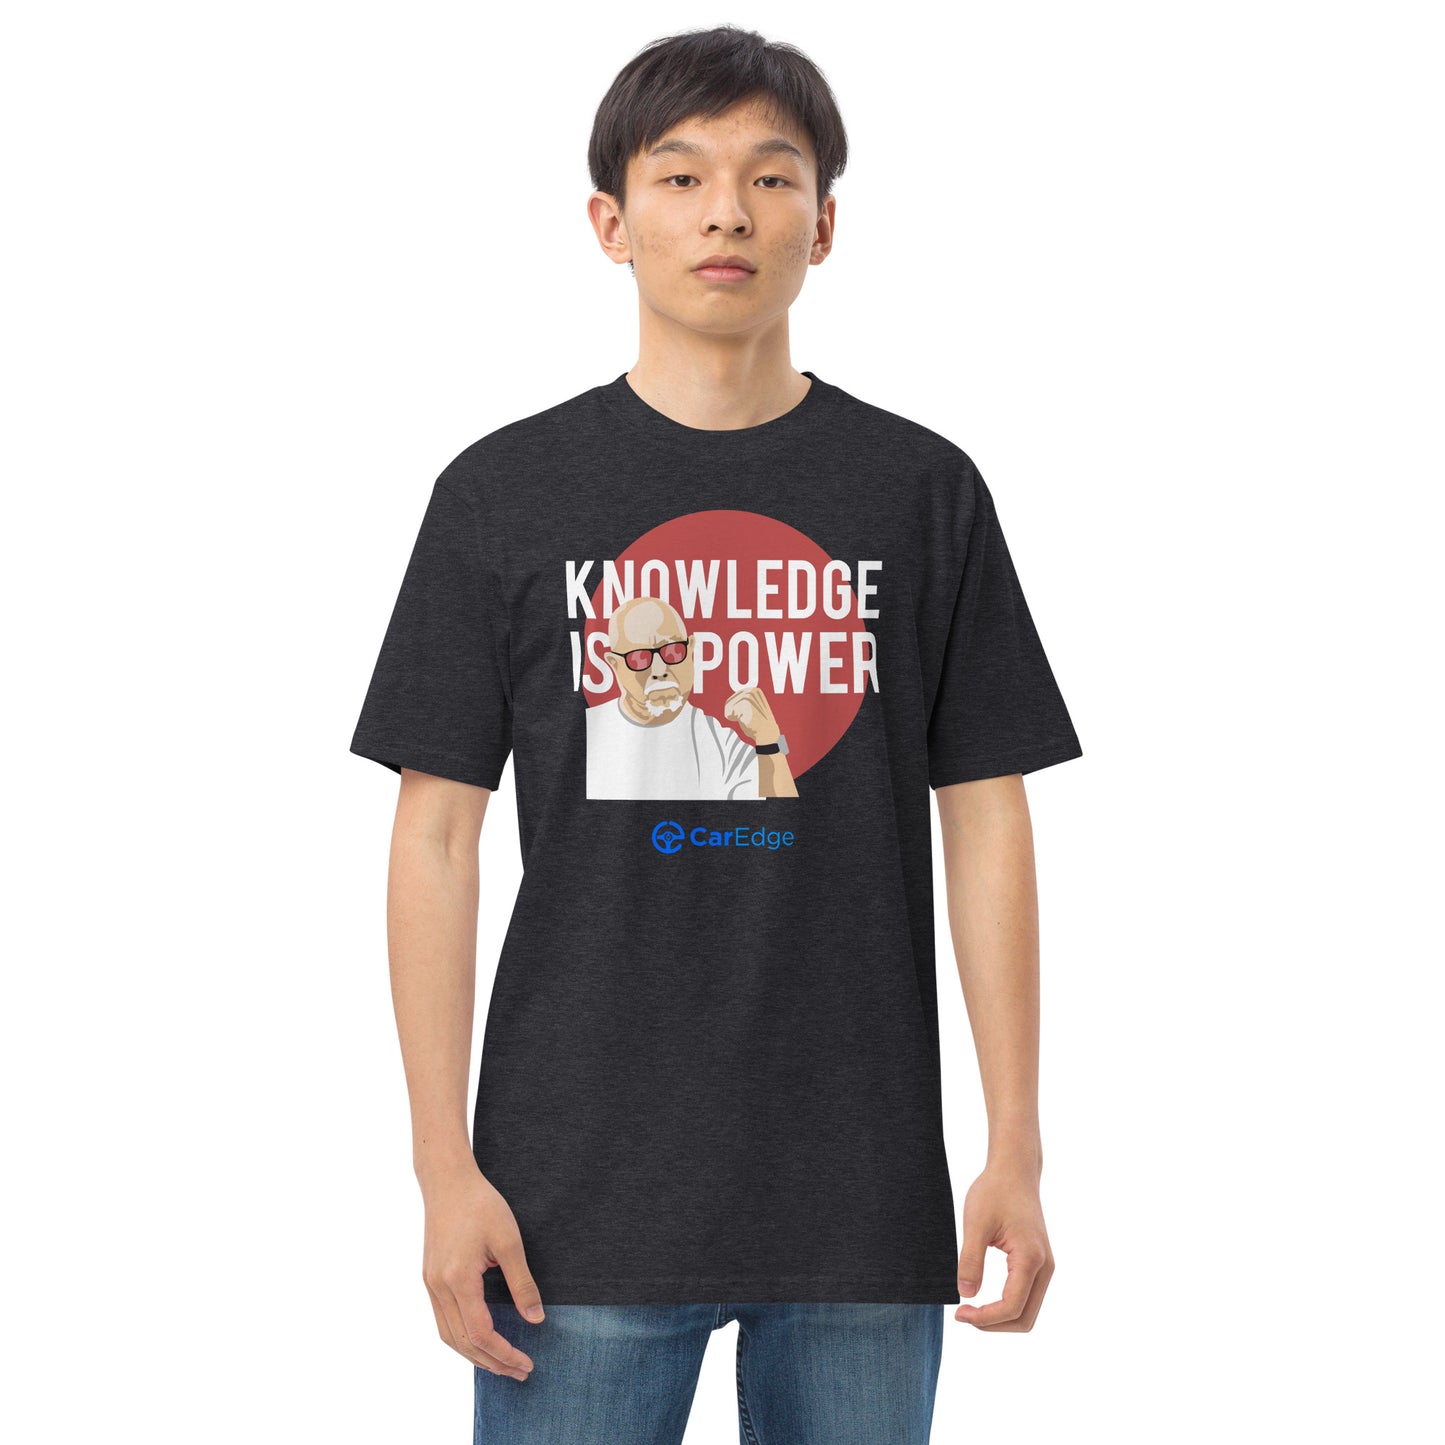 CarEdge Knowledge is Power T-Shirt - Men's